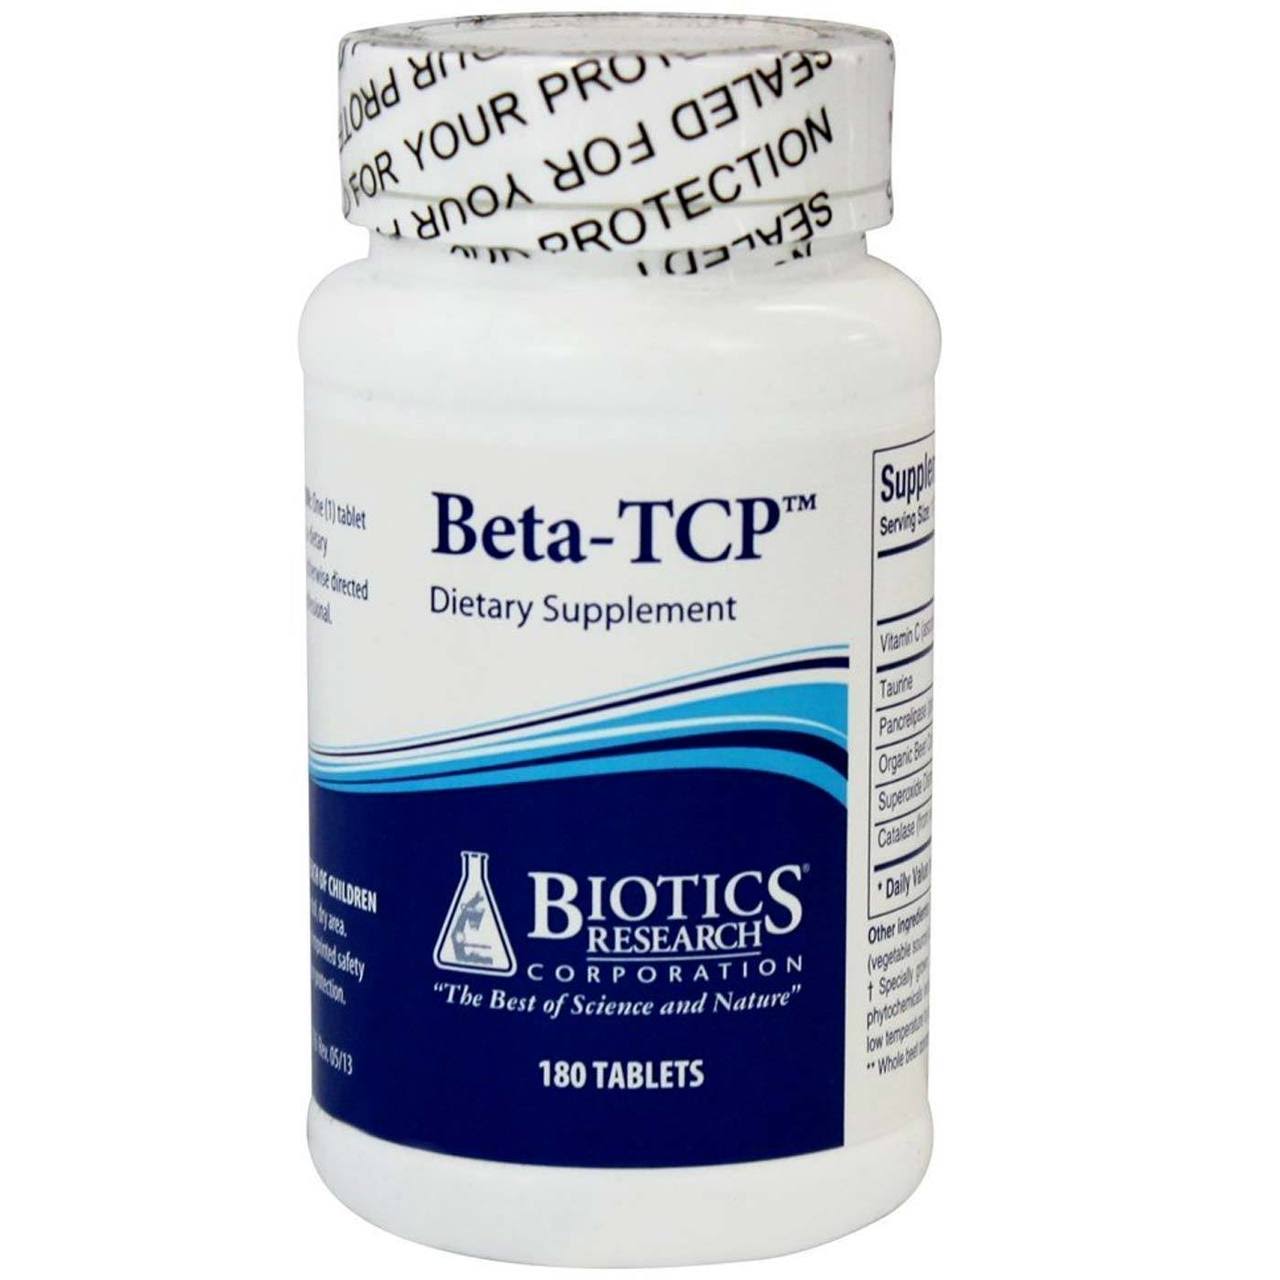 Biotics Research - Beta-TCP - 180 Tablets